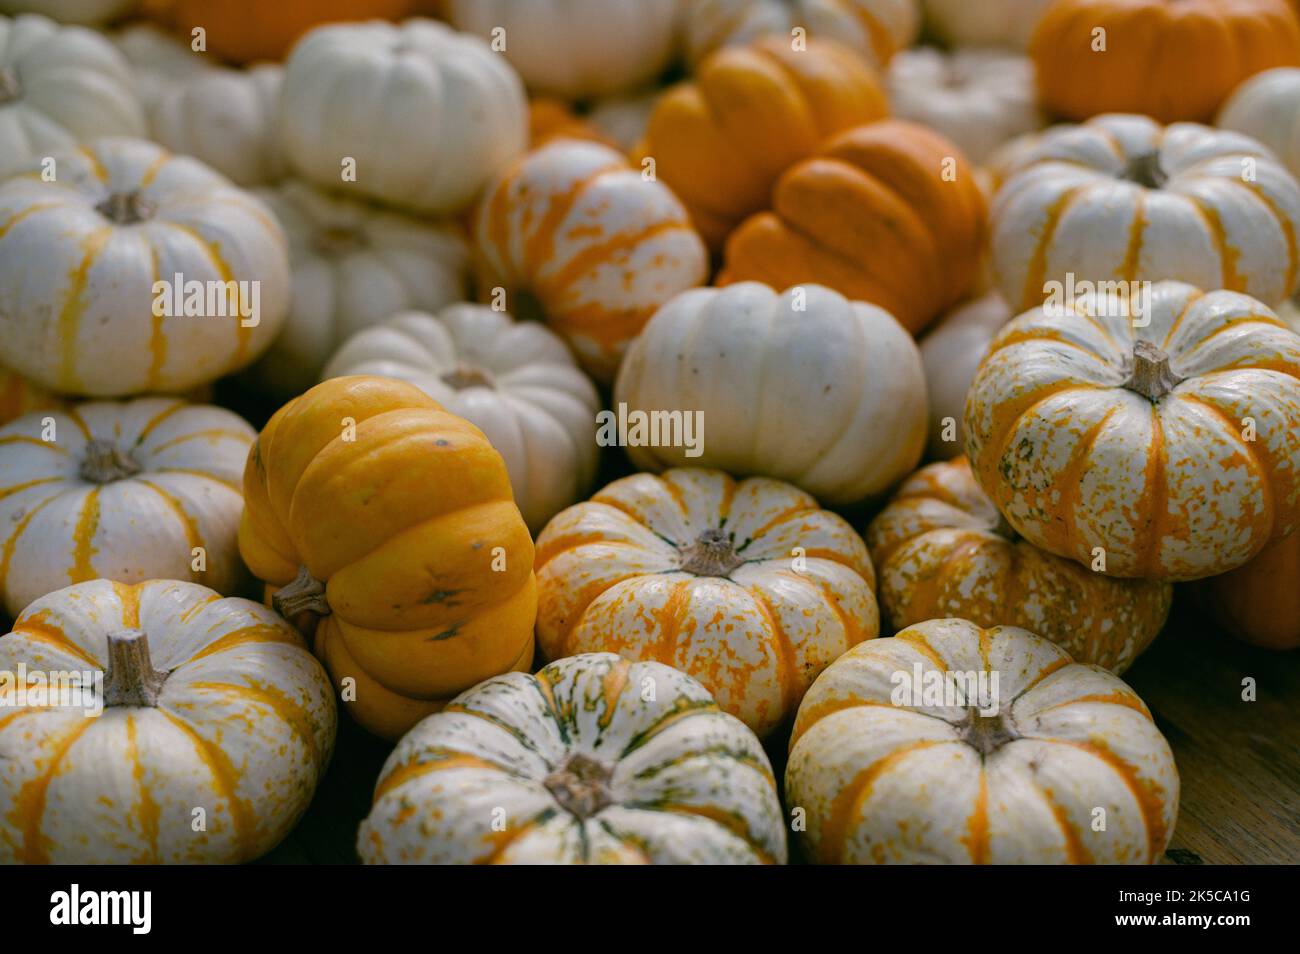 Orange and white mini pumpkins Stock Photo